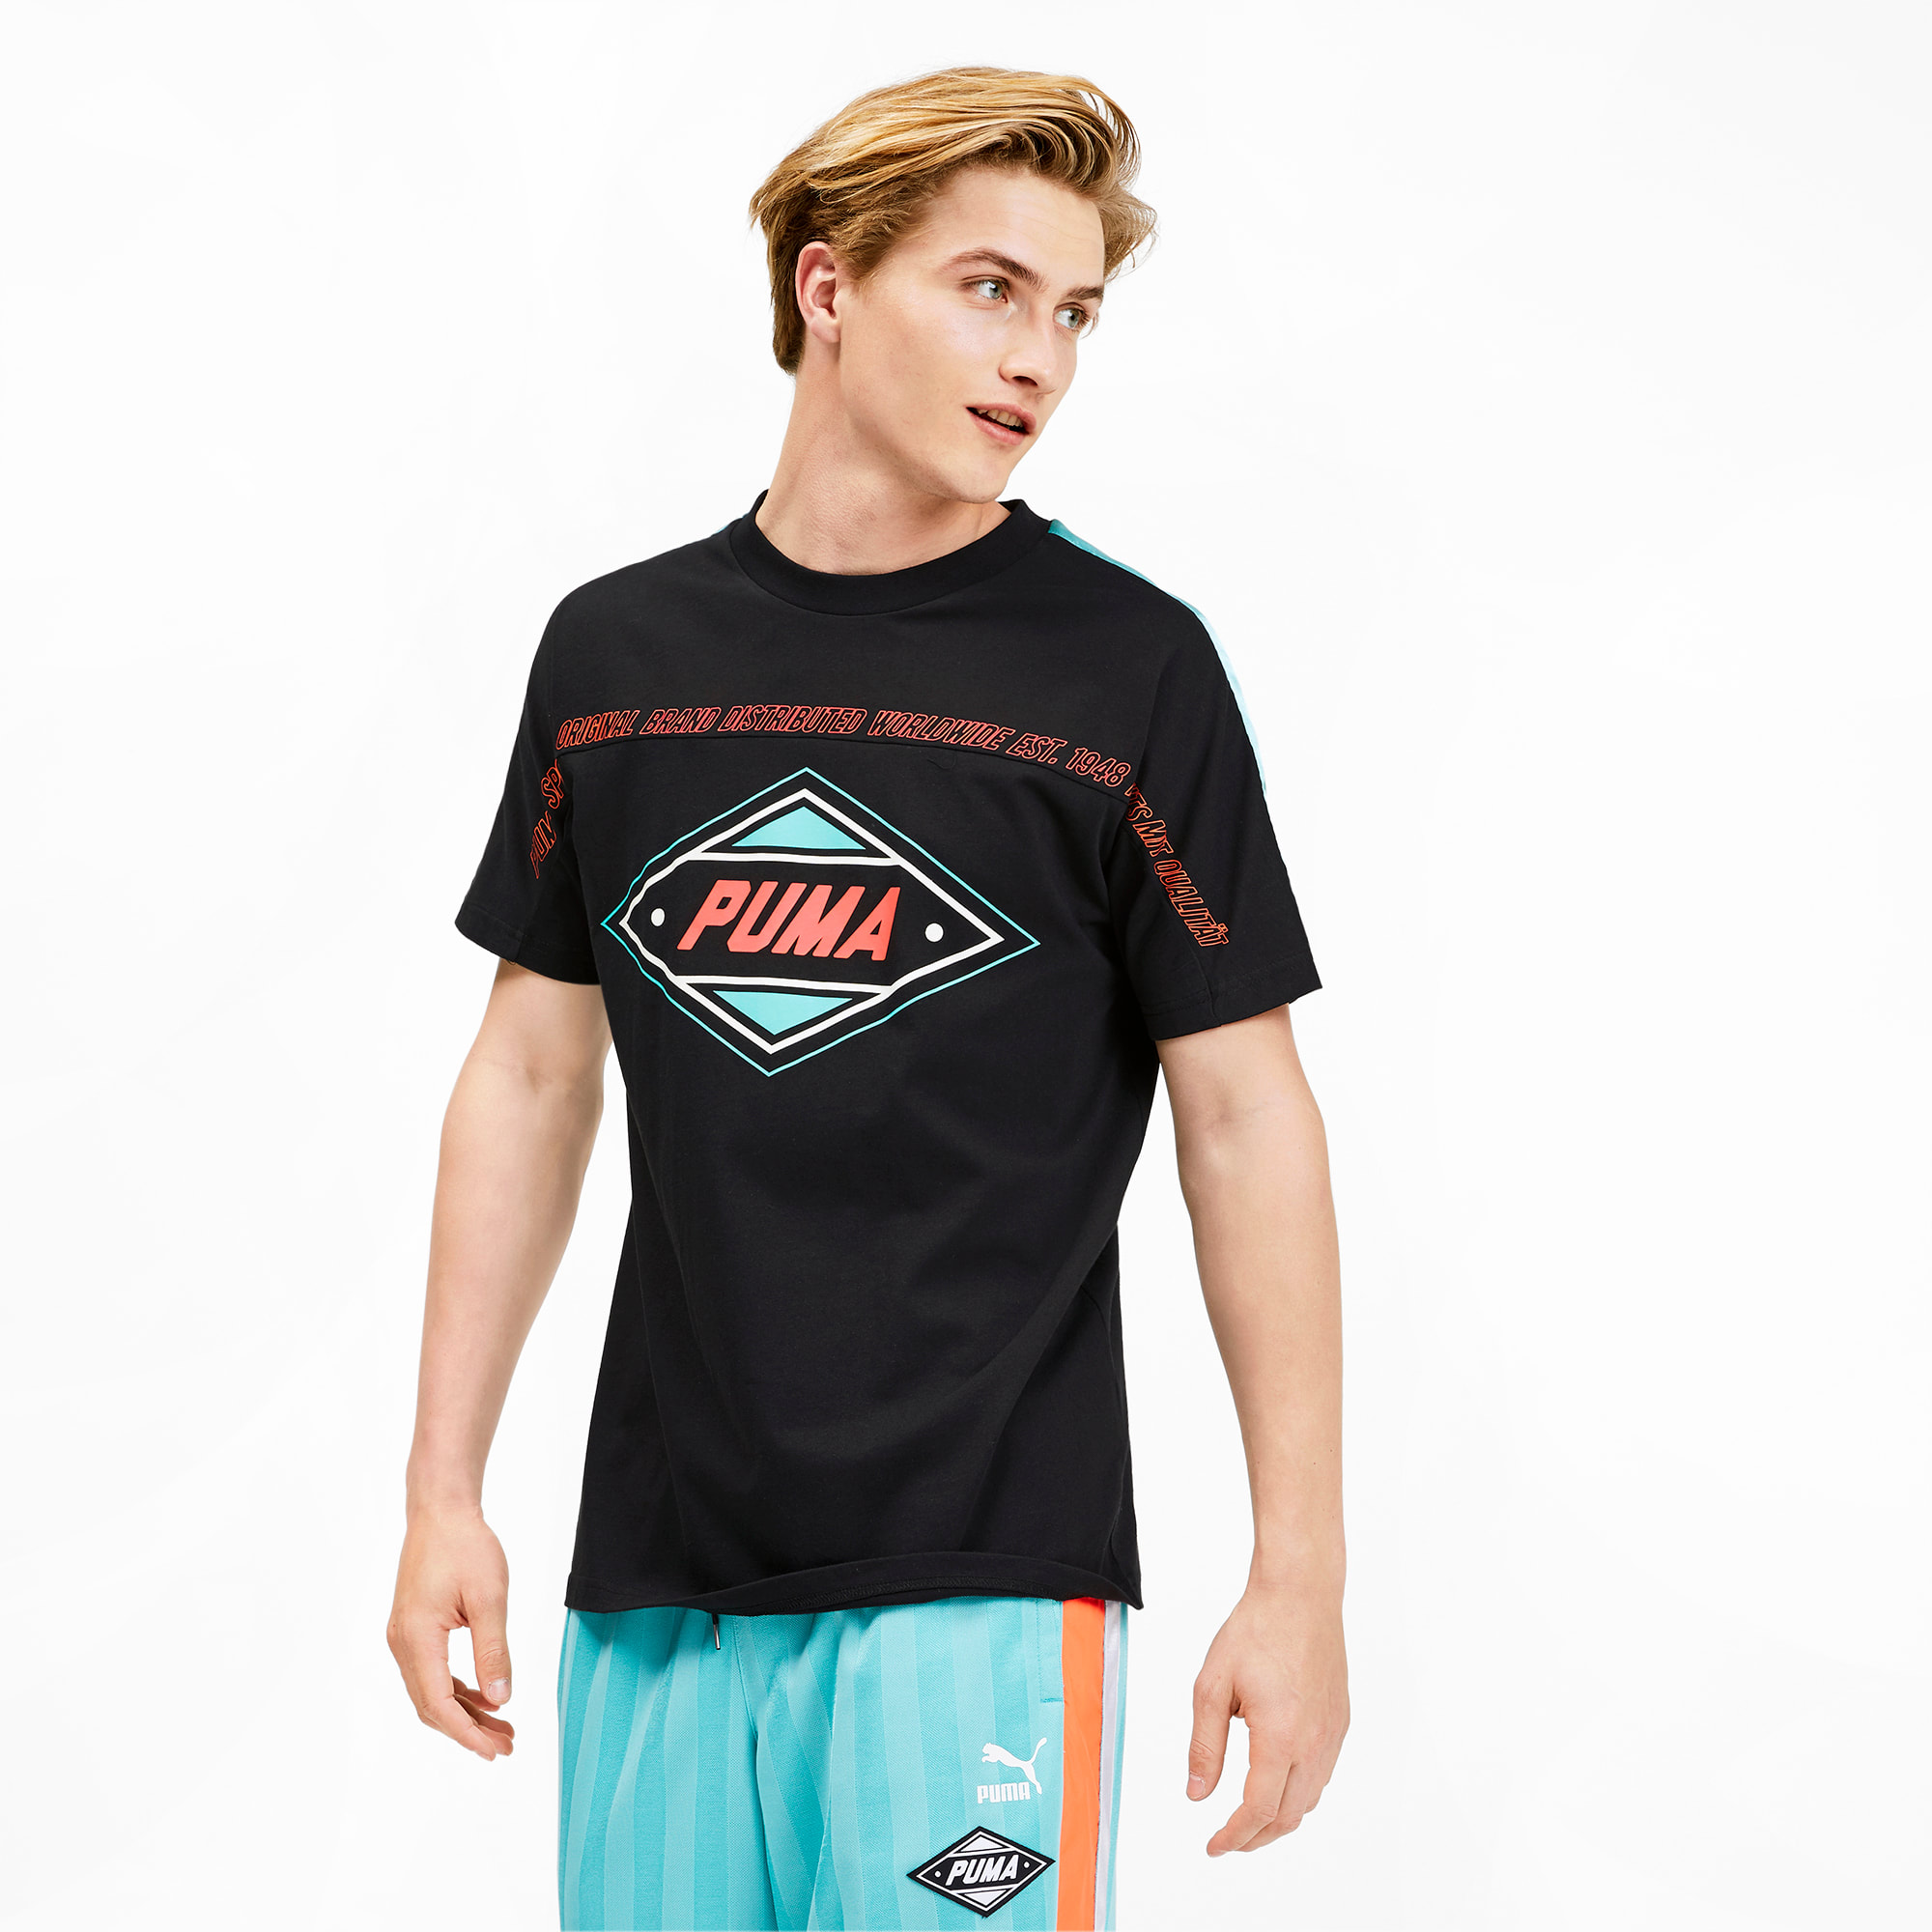 Eliasroyz Puma T Shirt Mens T Shirt